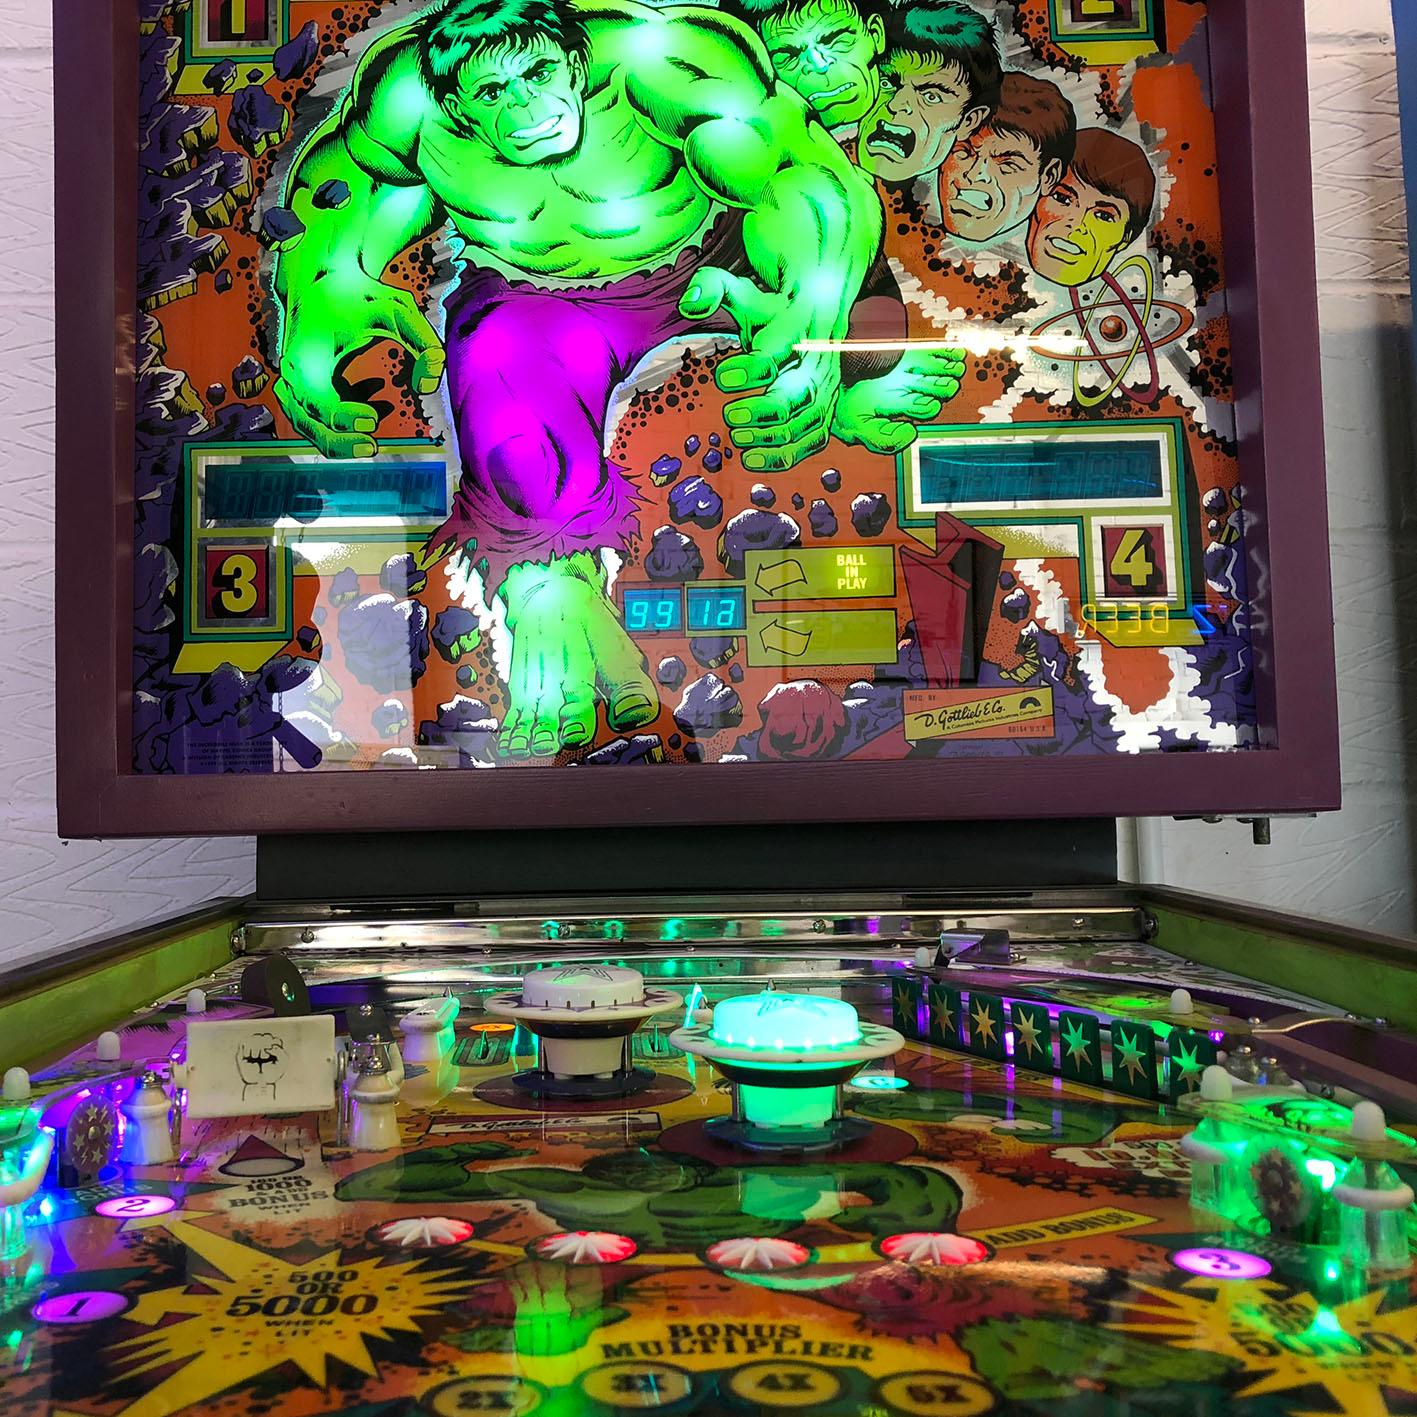 Metal 1979 Incredible Hulk' Pinball Machine For Sale